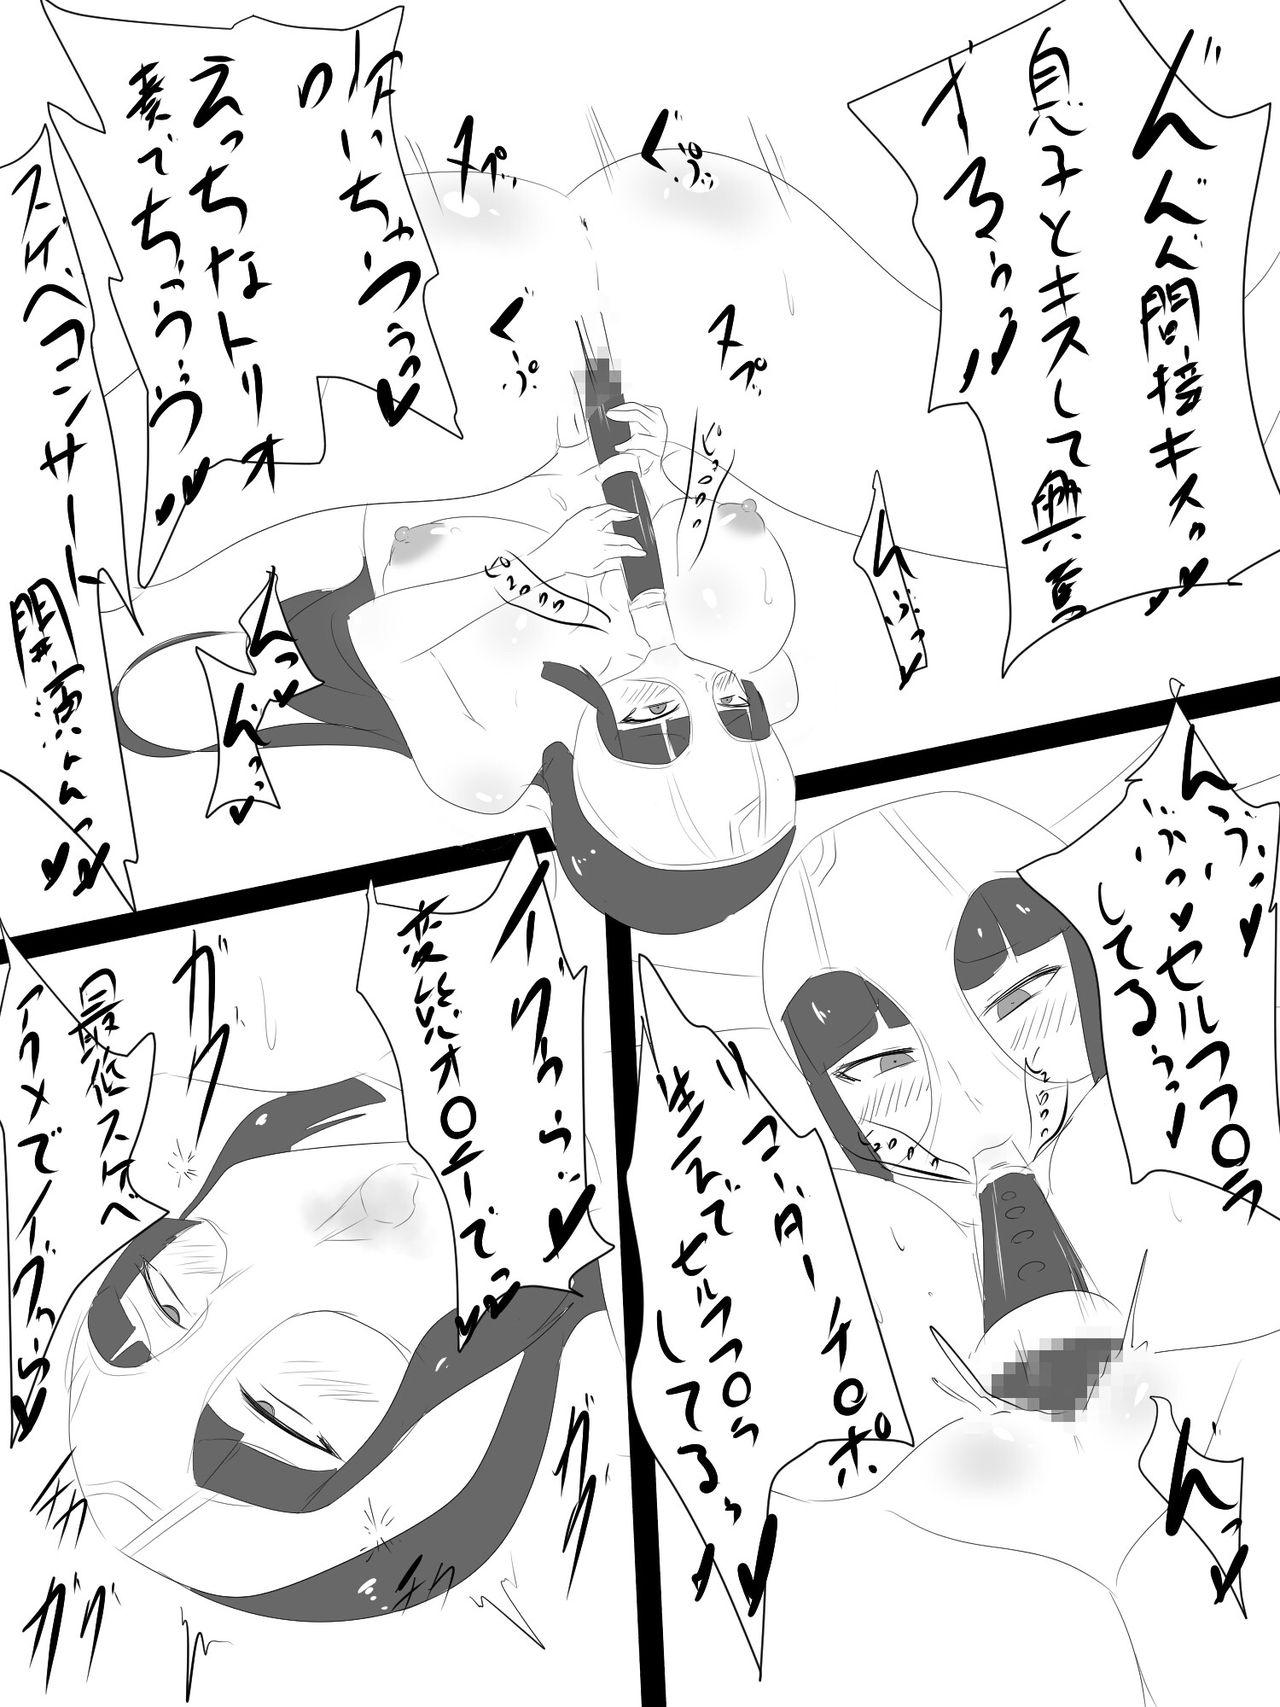 Messy 変態ママオナニー漫画 - Original Slut - Page 3